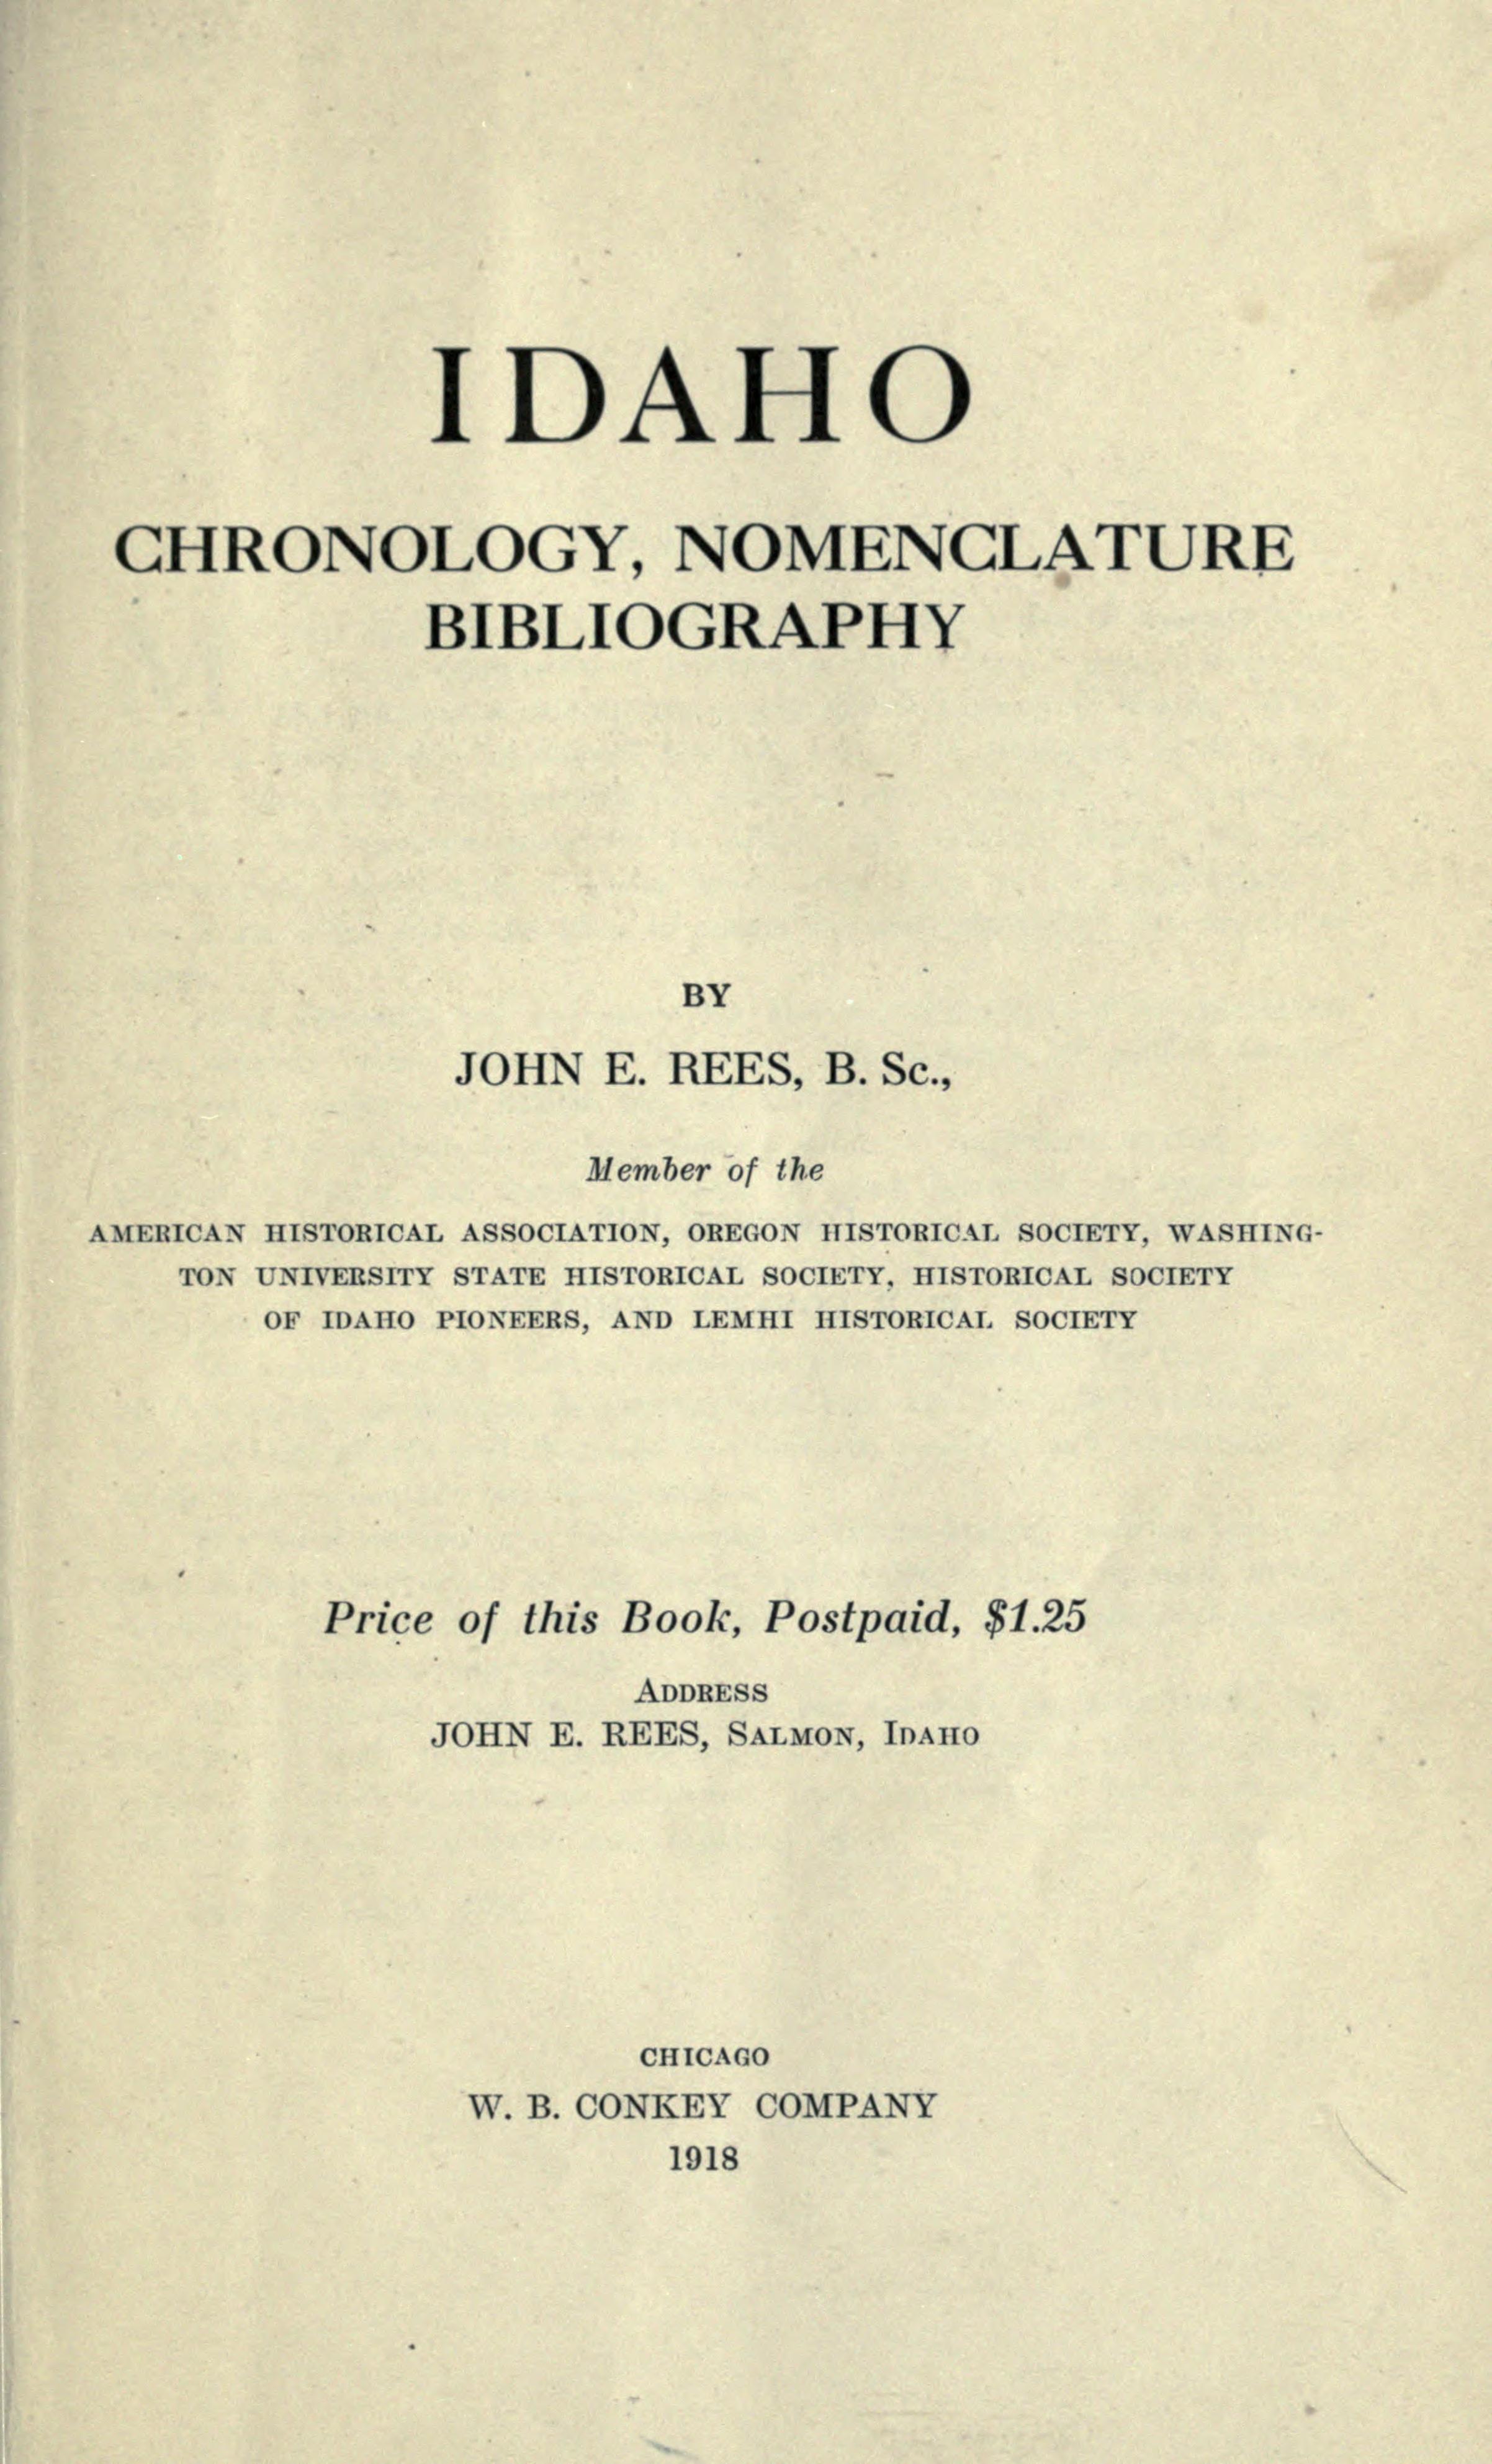 Idaho chronology, nomenclature, bibliography (book cover)